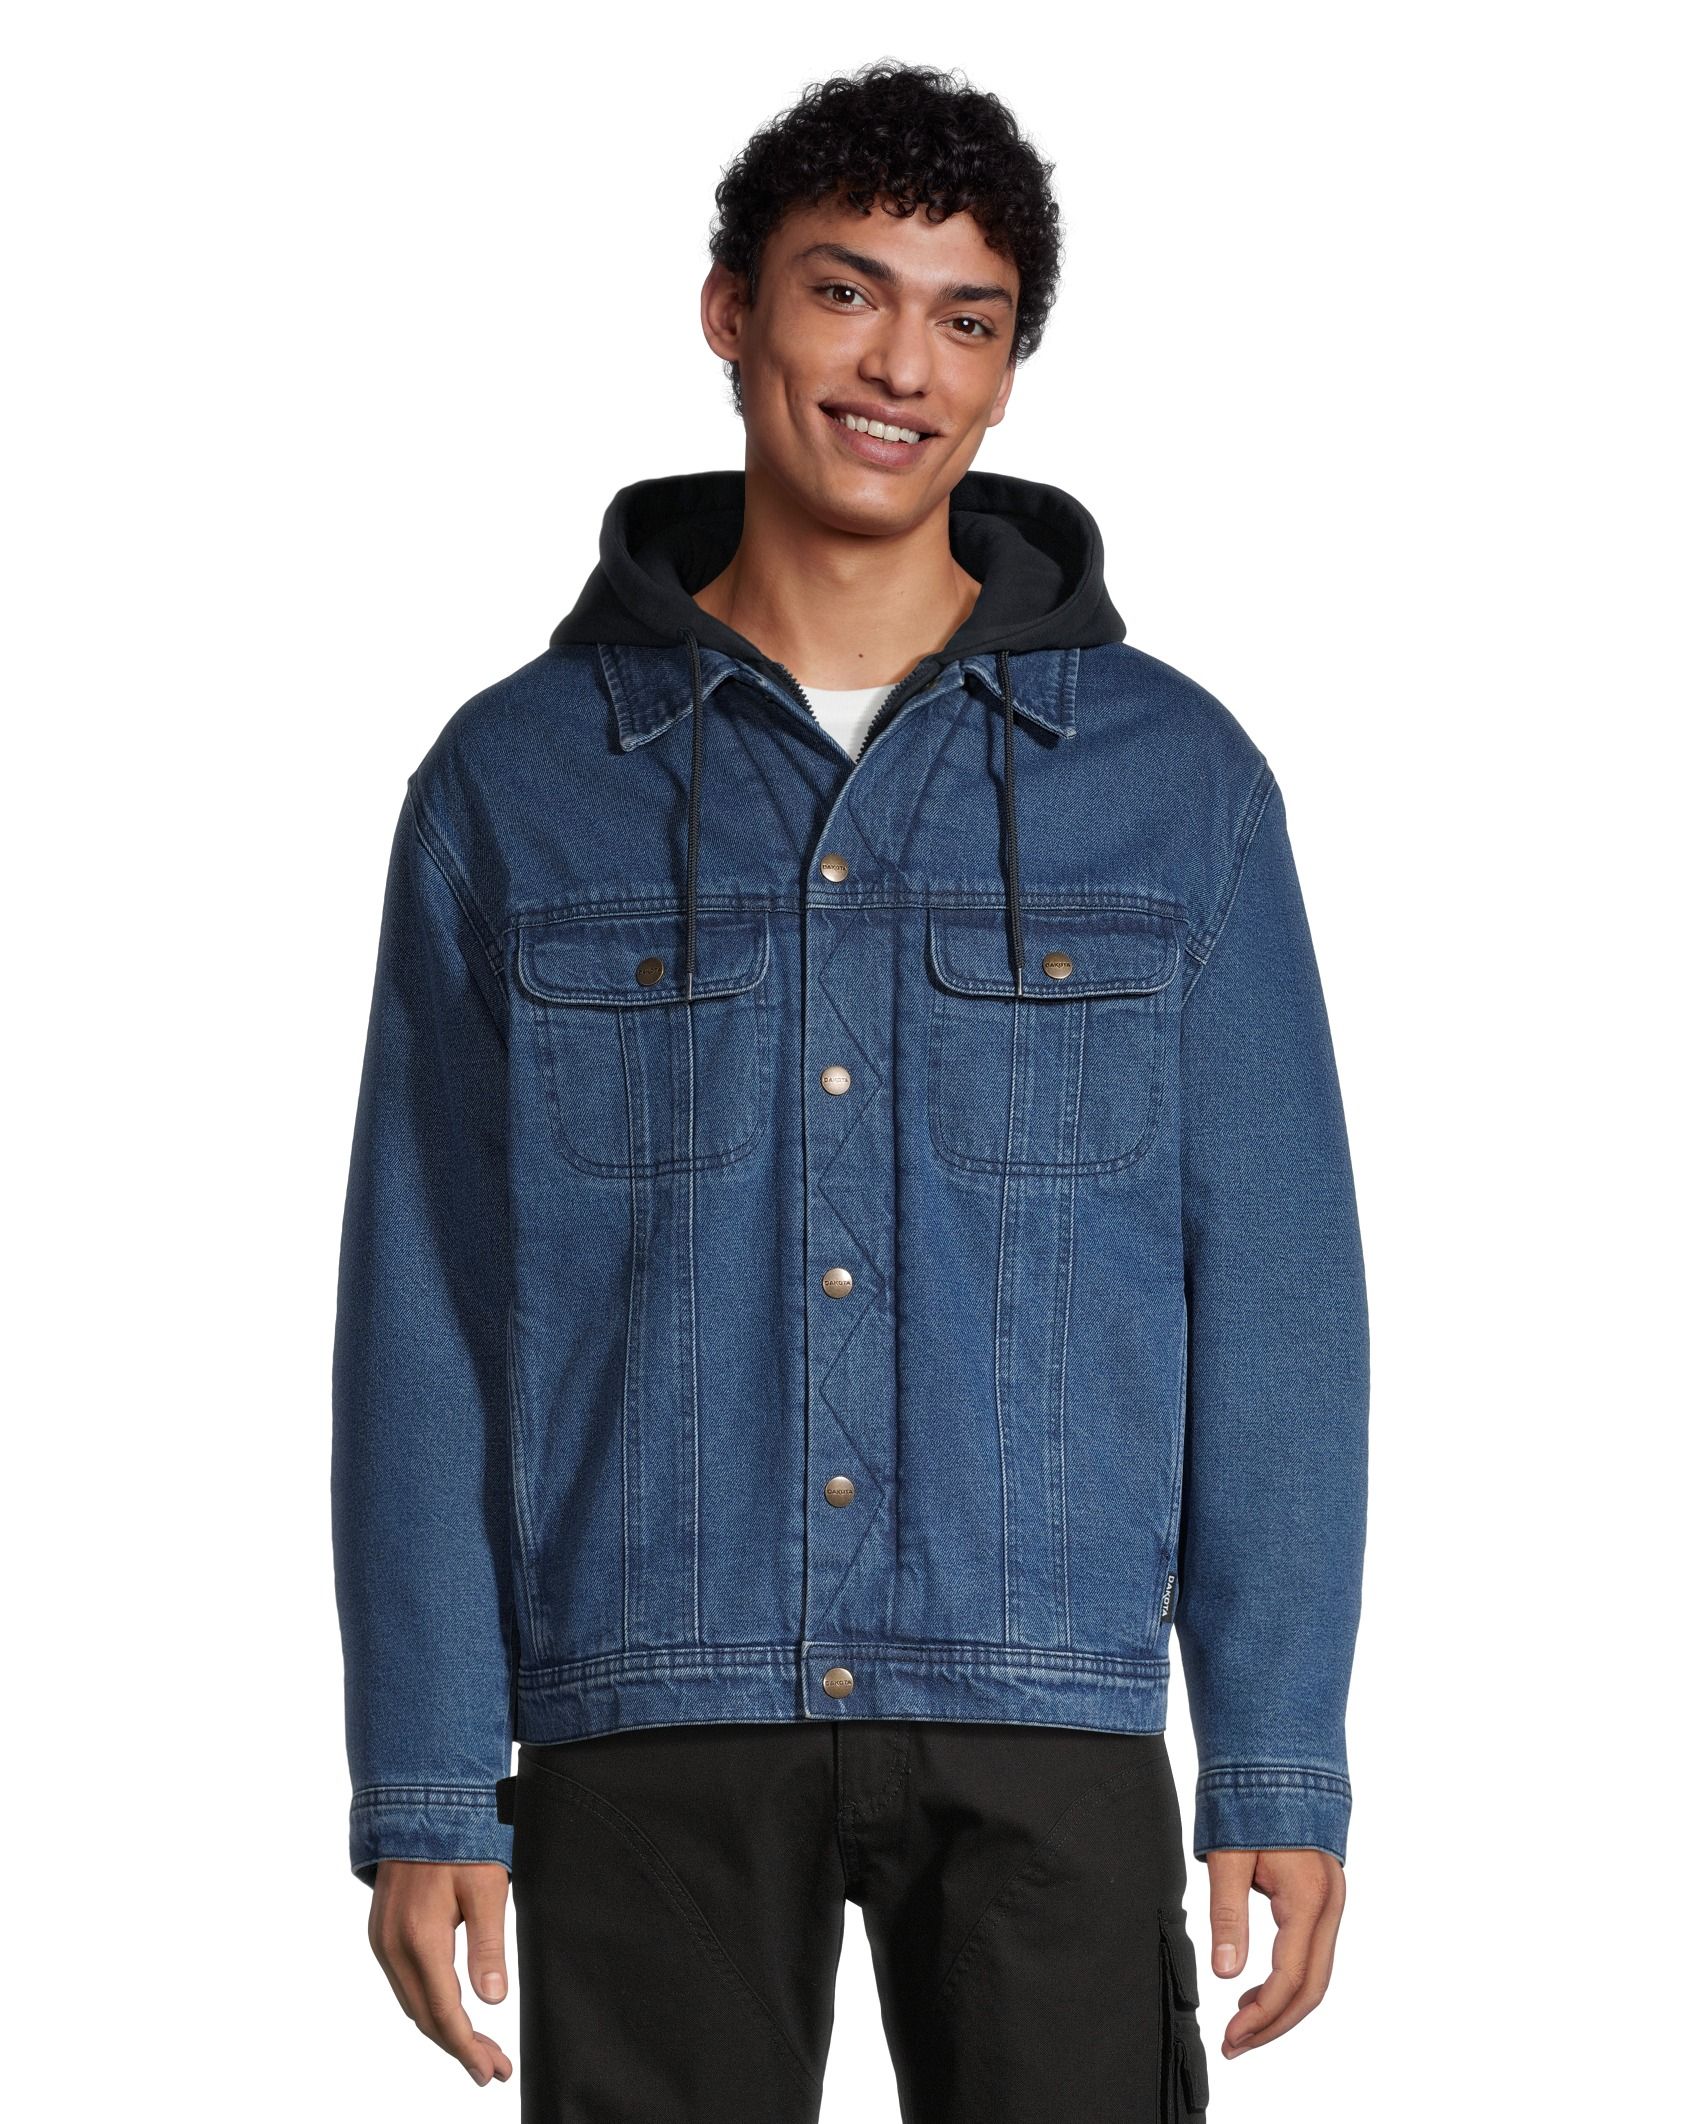 Sweatshirt Hooded Denim Jacket - Medium Wash